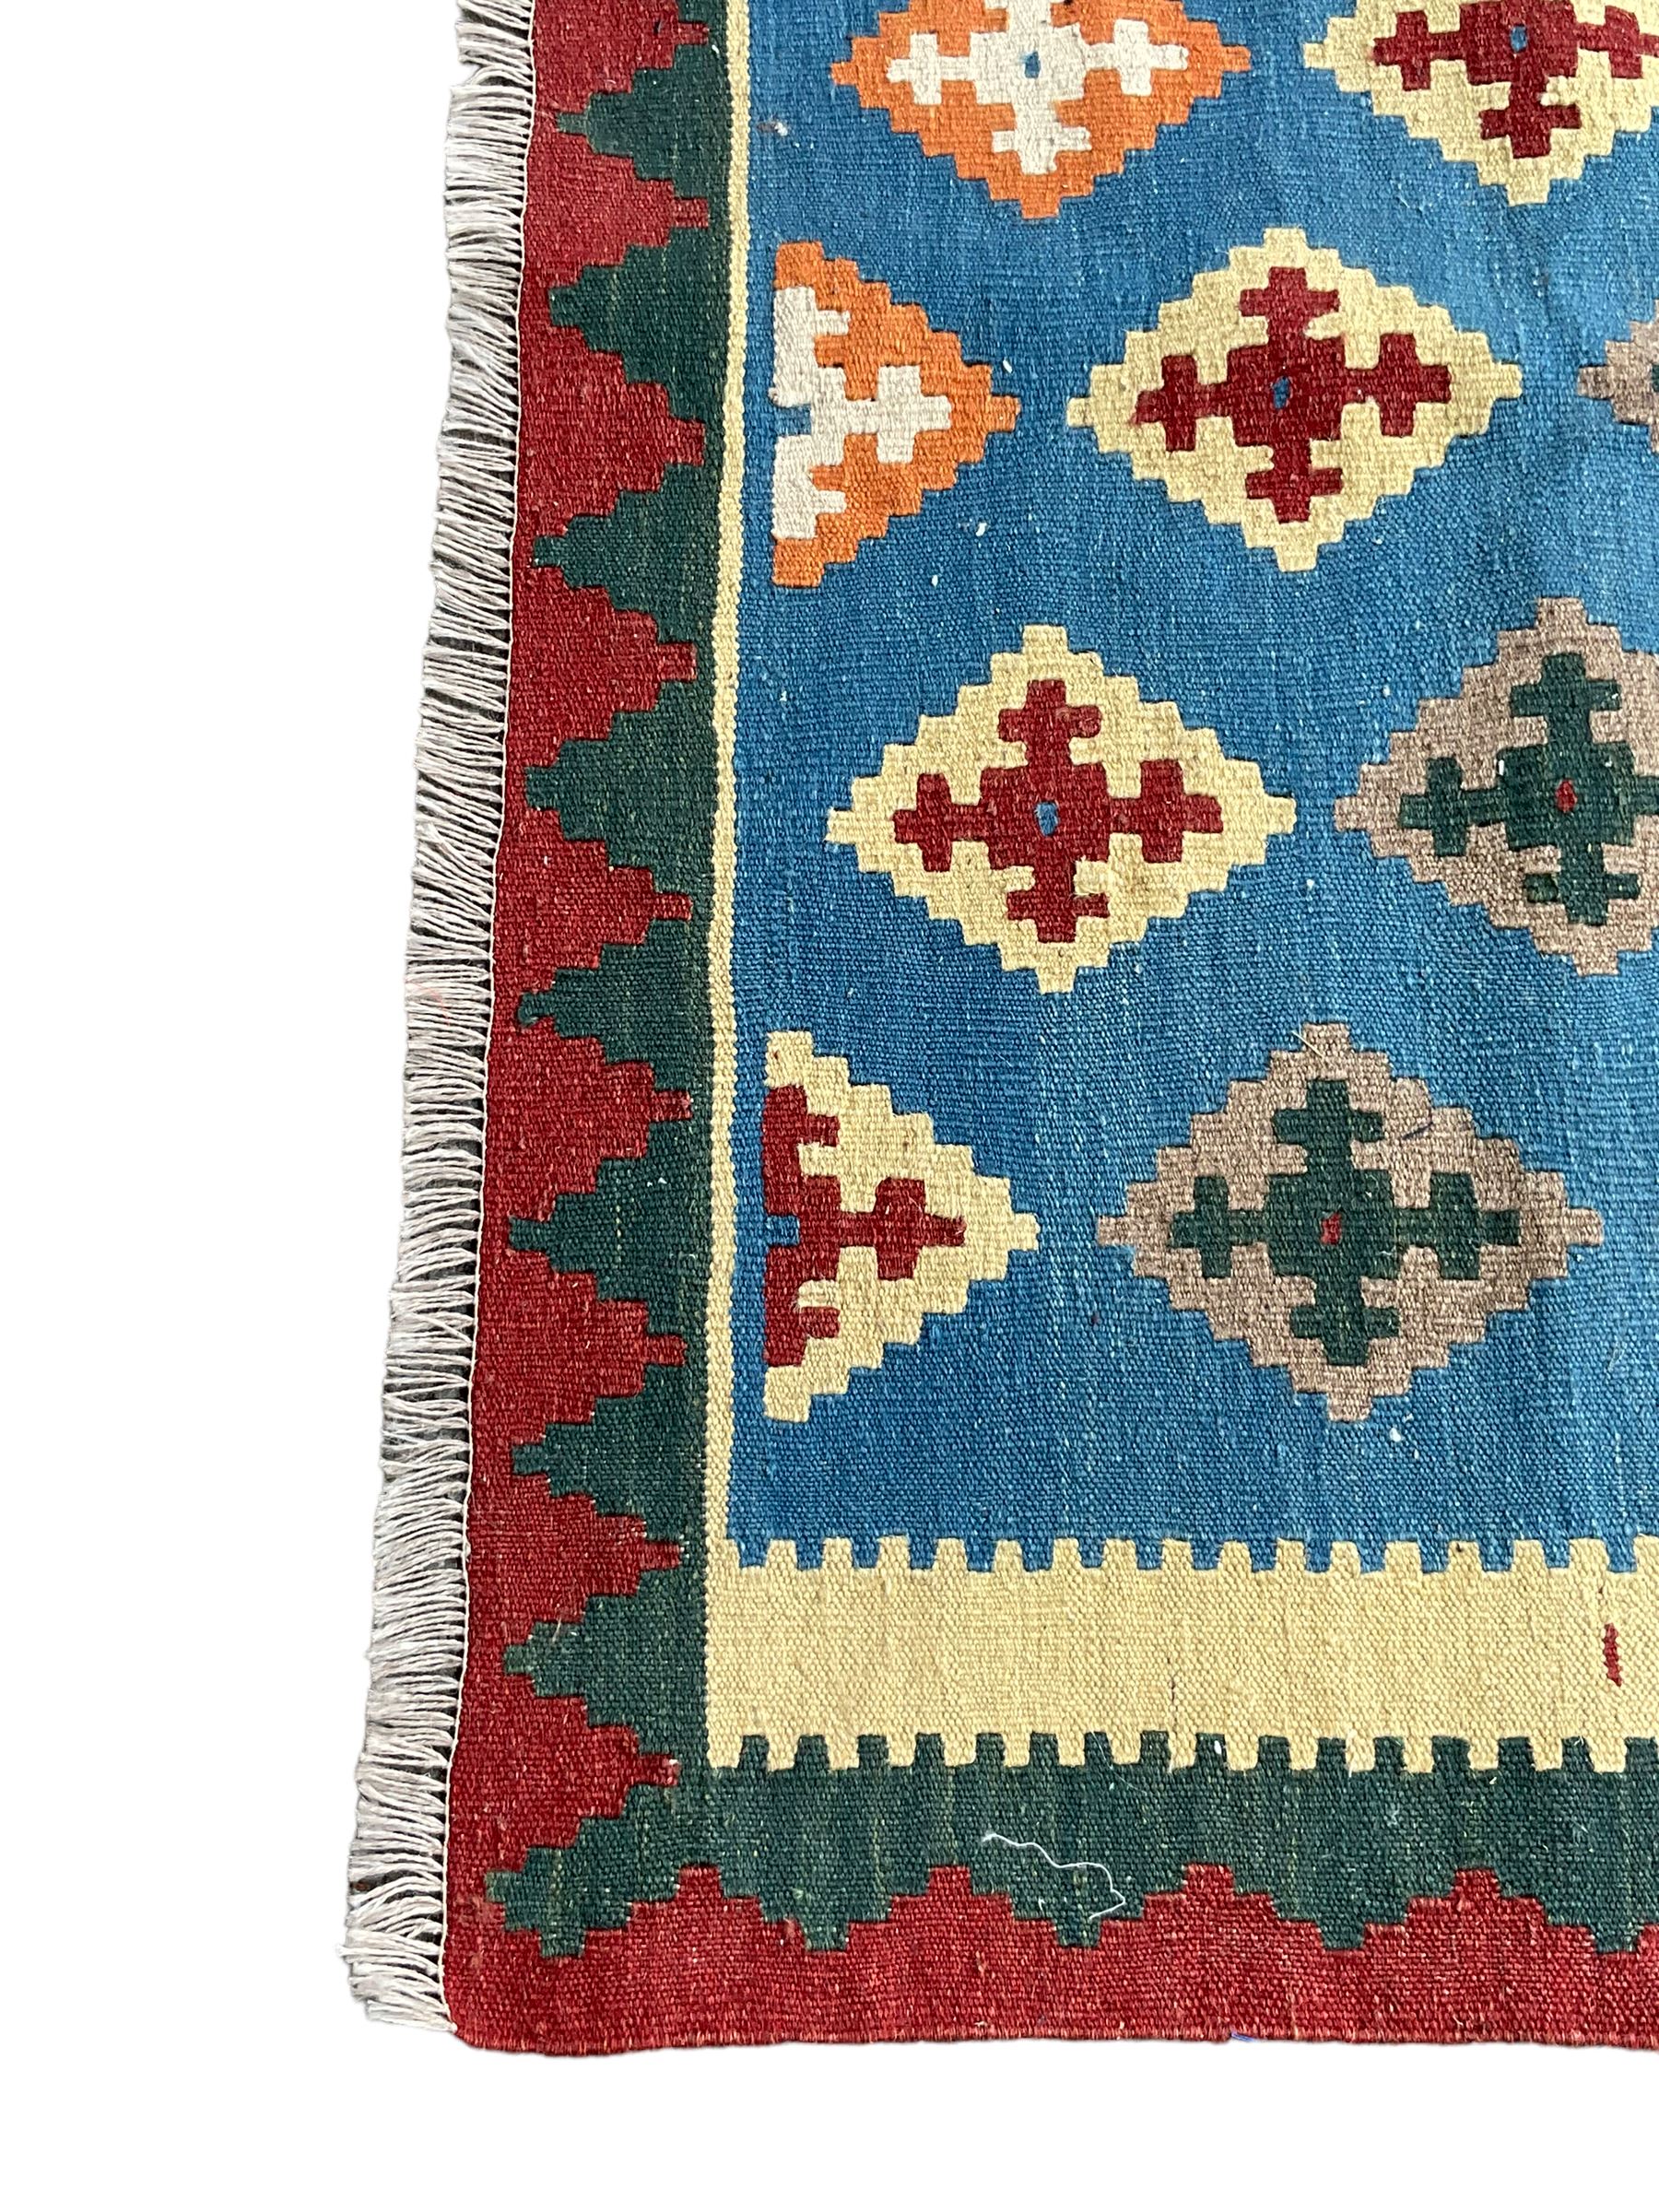 Kilim rug - Image 2 of 5